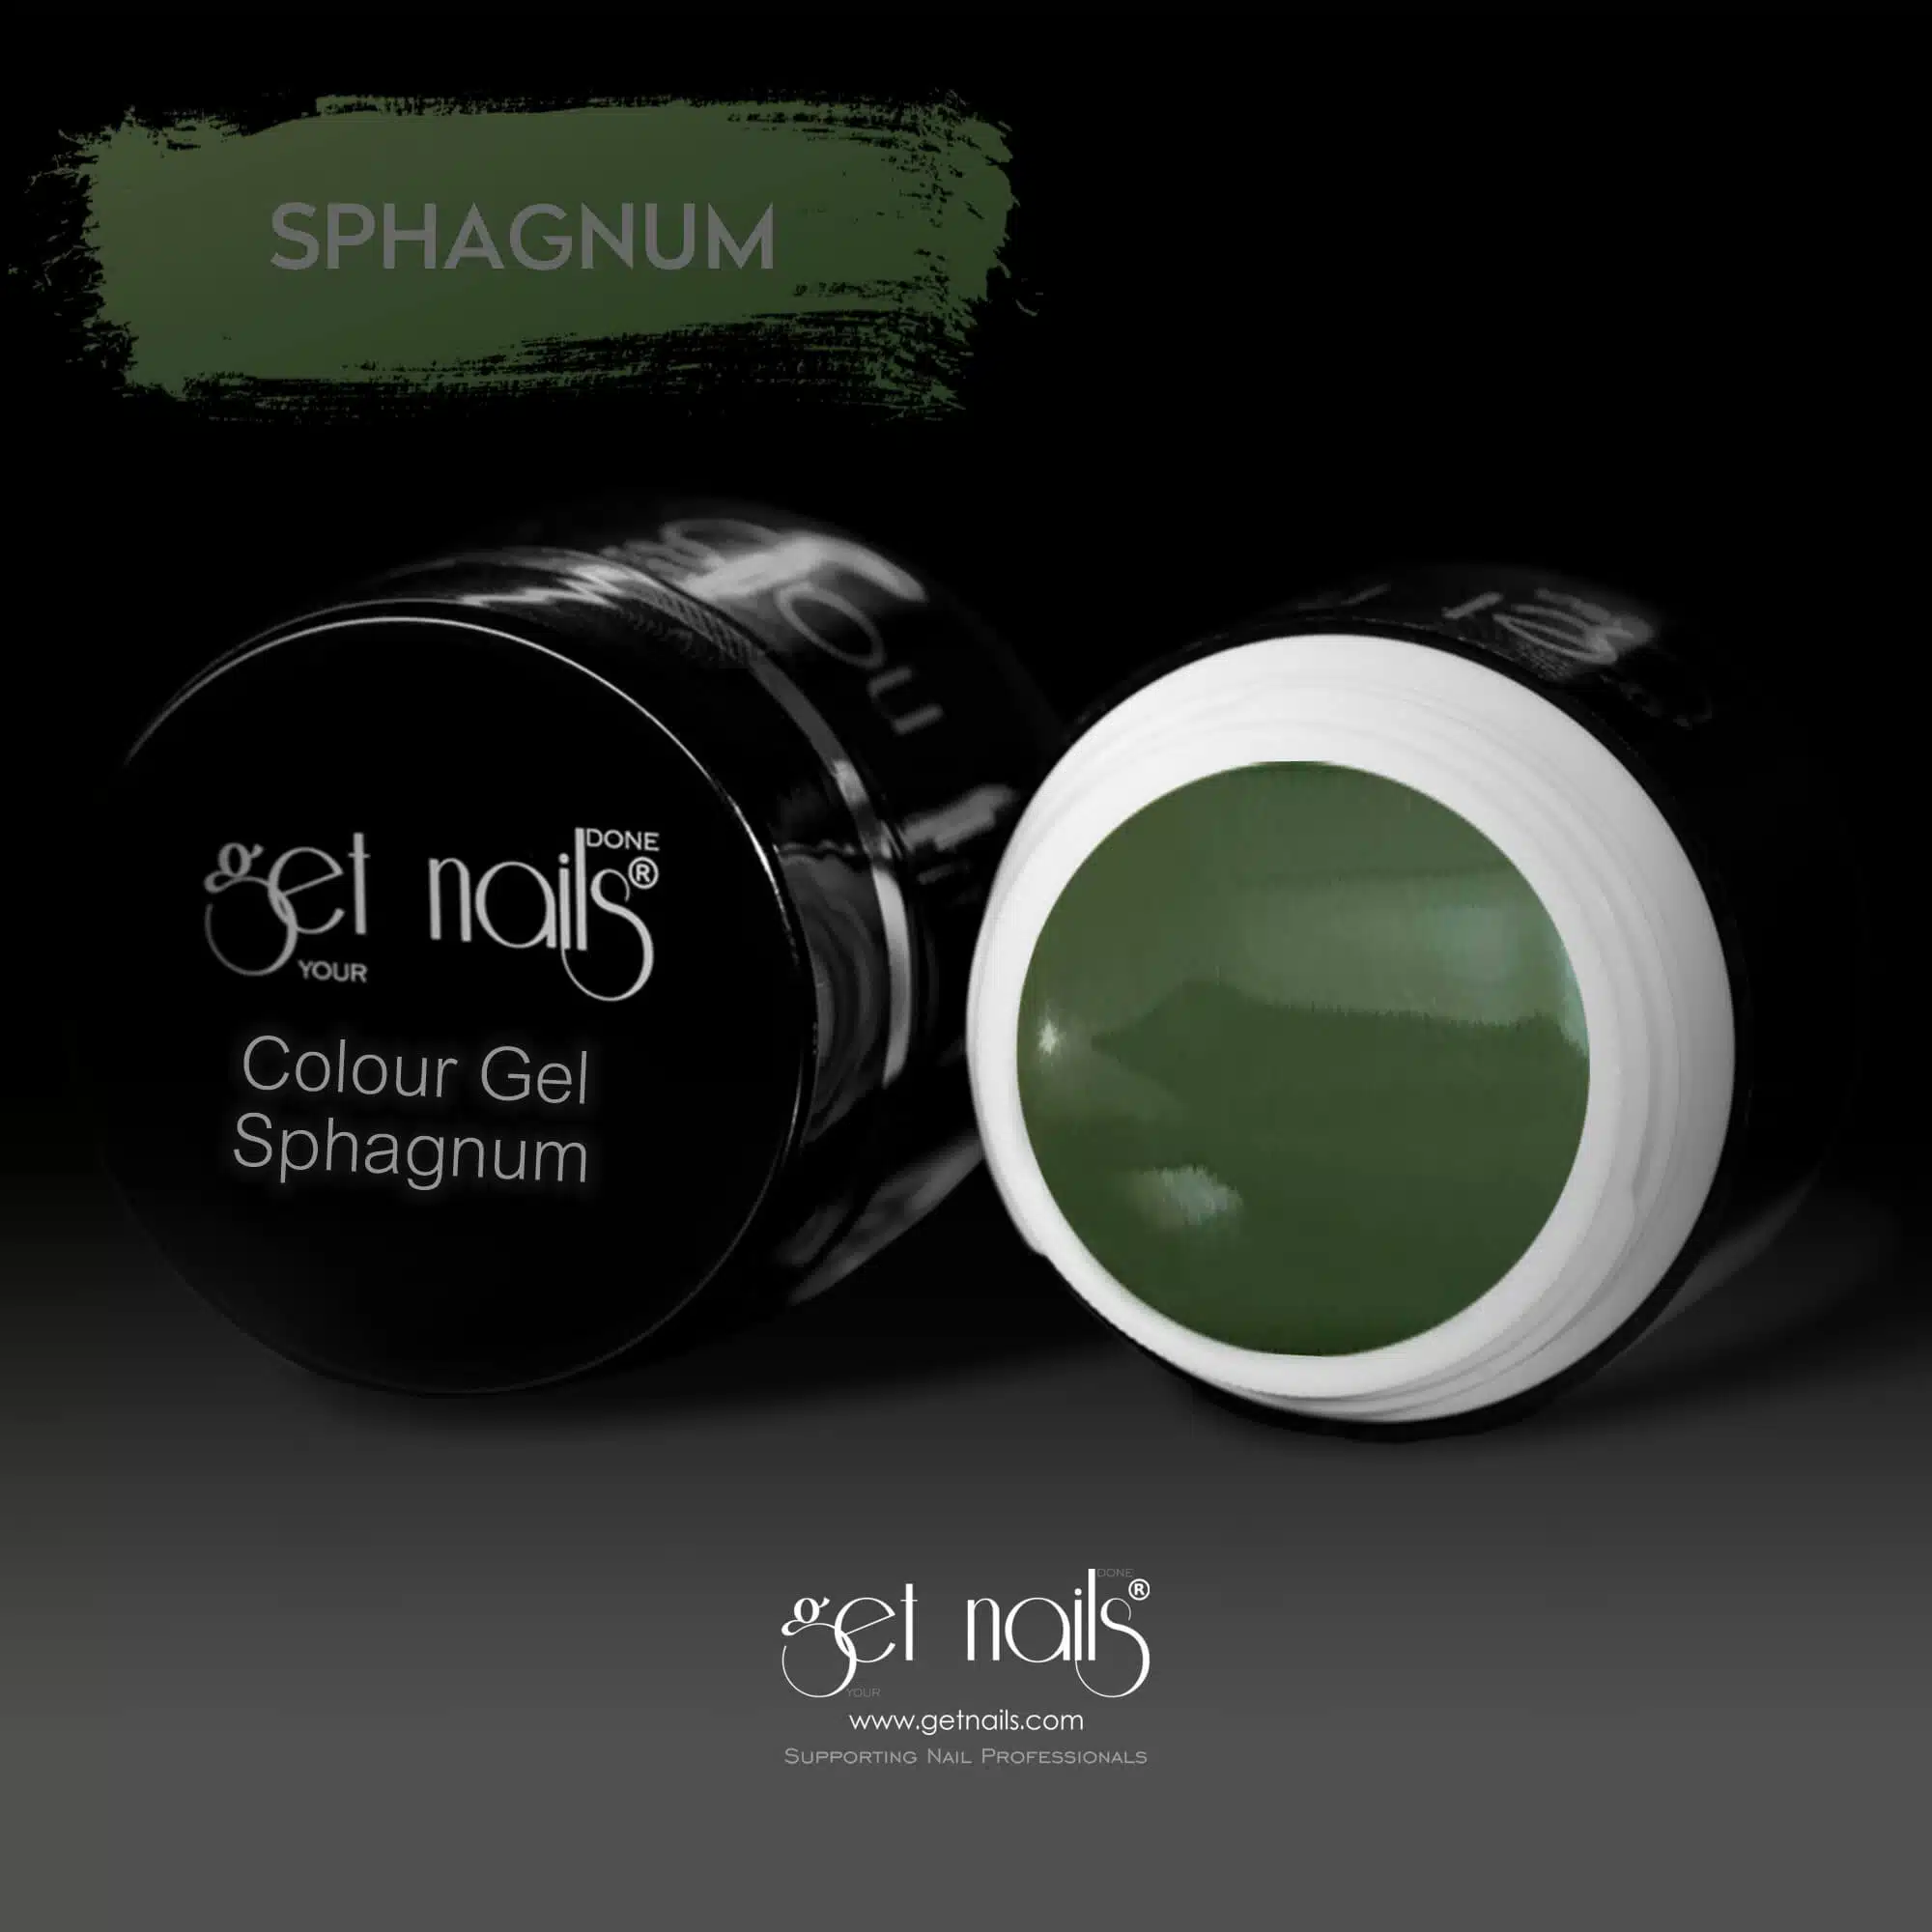 Get Nails Austria - Colour Gel Sphagnum 5g